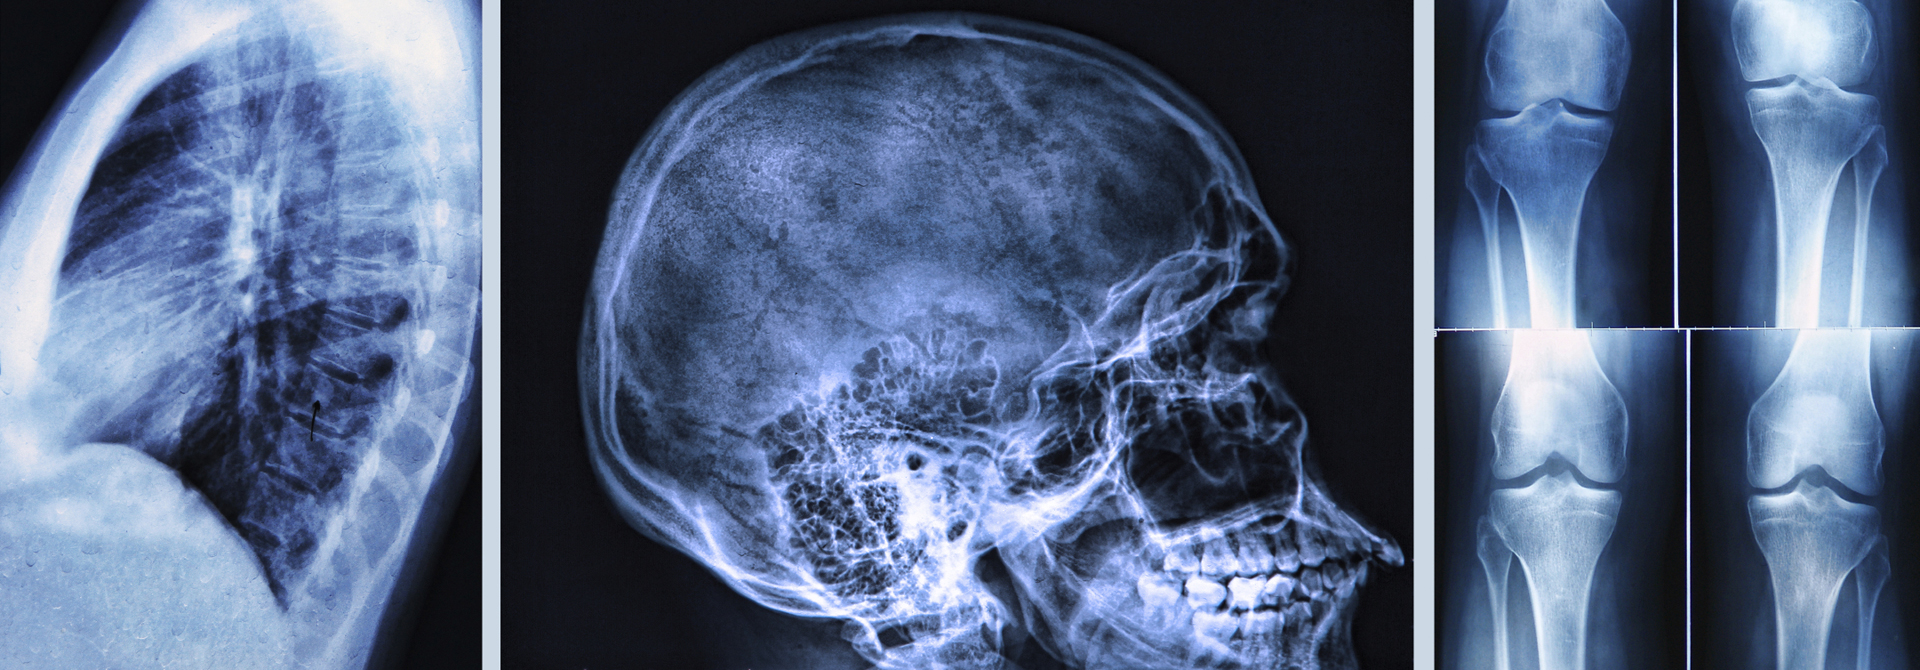 Radiography of Human Bones: x-ray and MRI scans